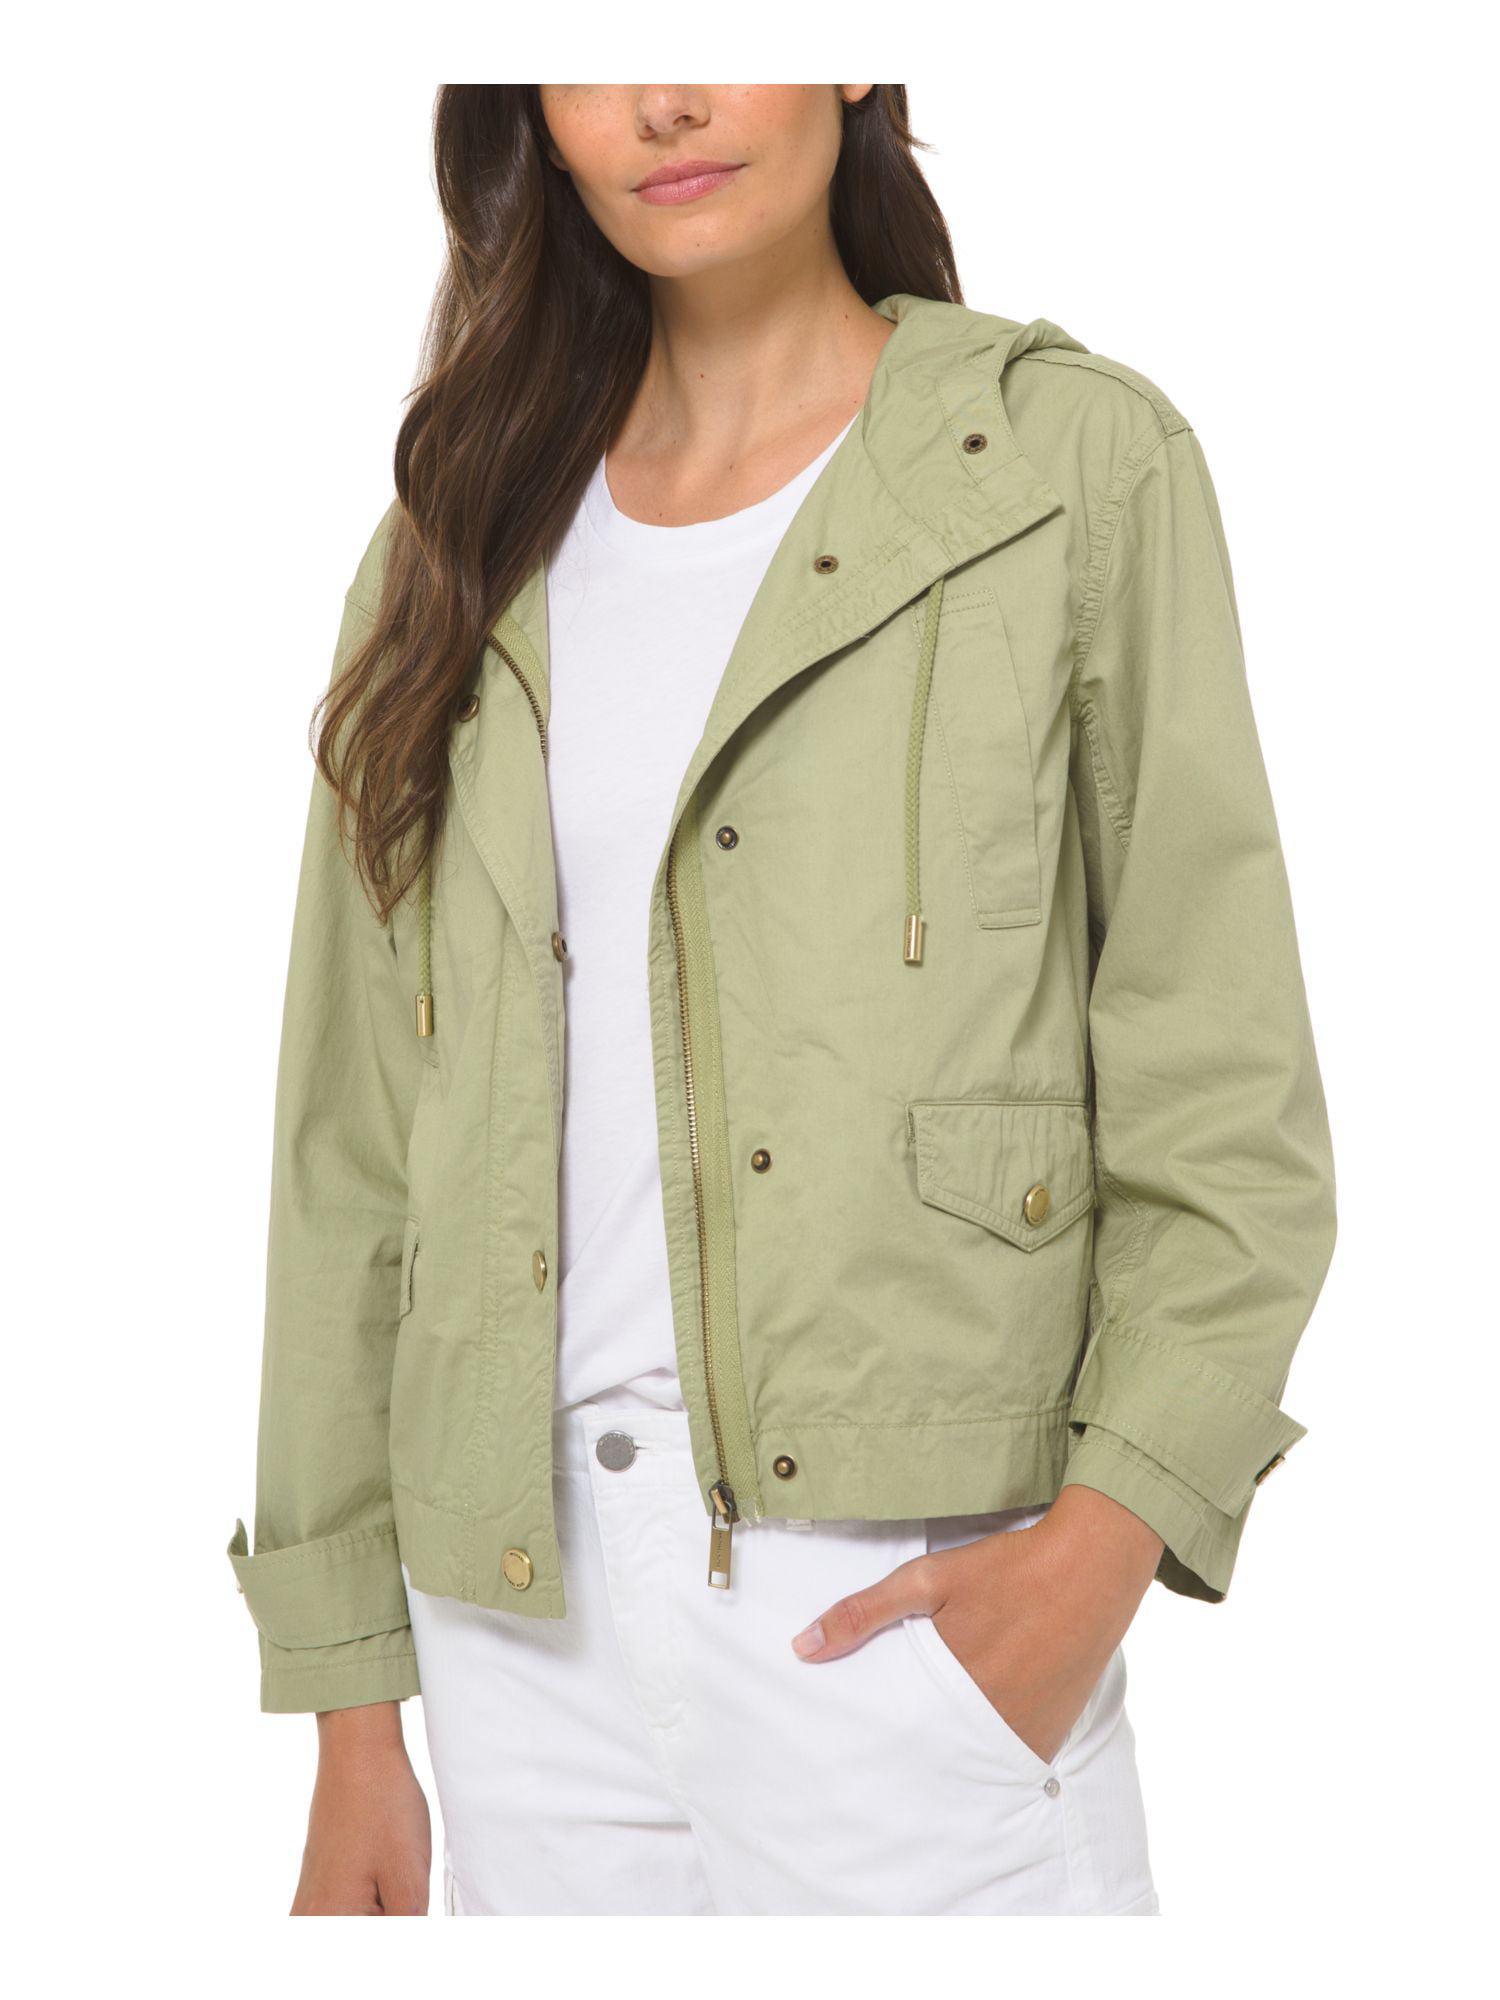 Yobecho women's military jacket short coat Walmart.com